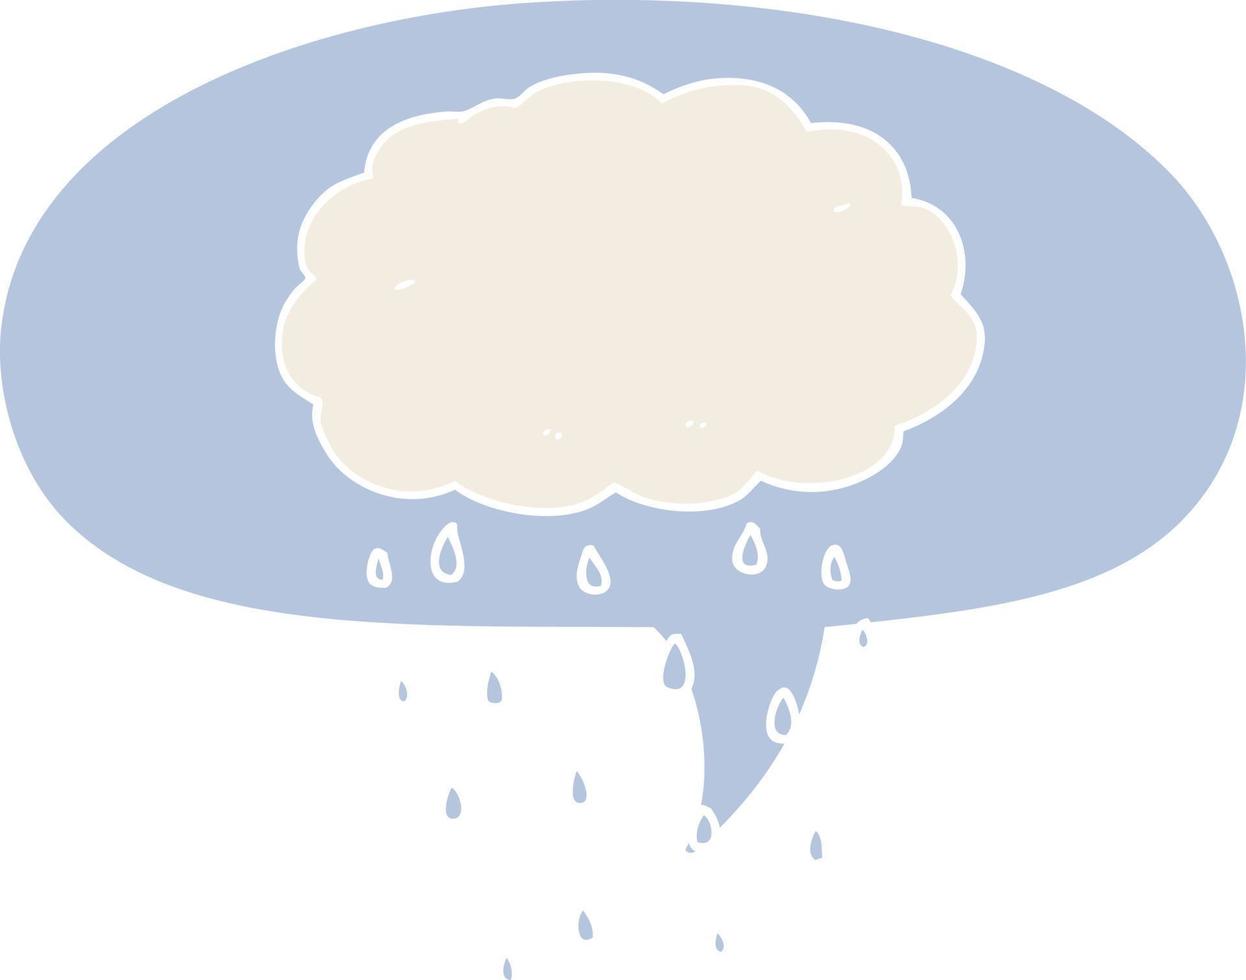 cartoon rain cloud and speech bubble in retro style vector